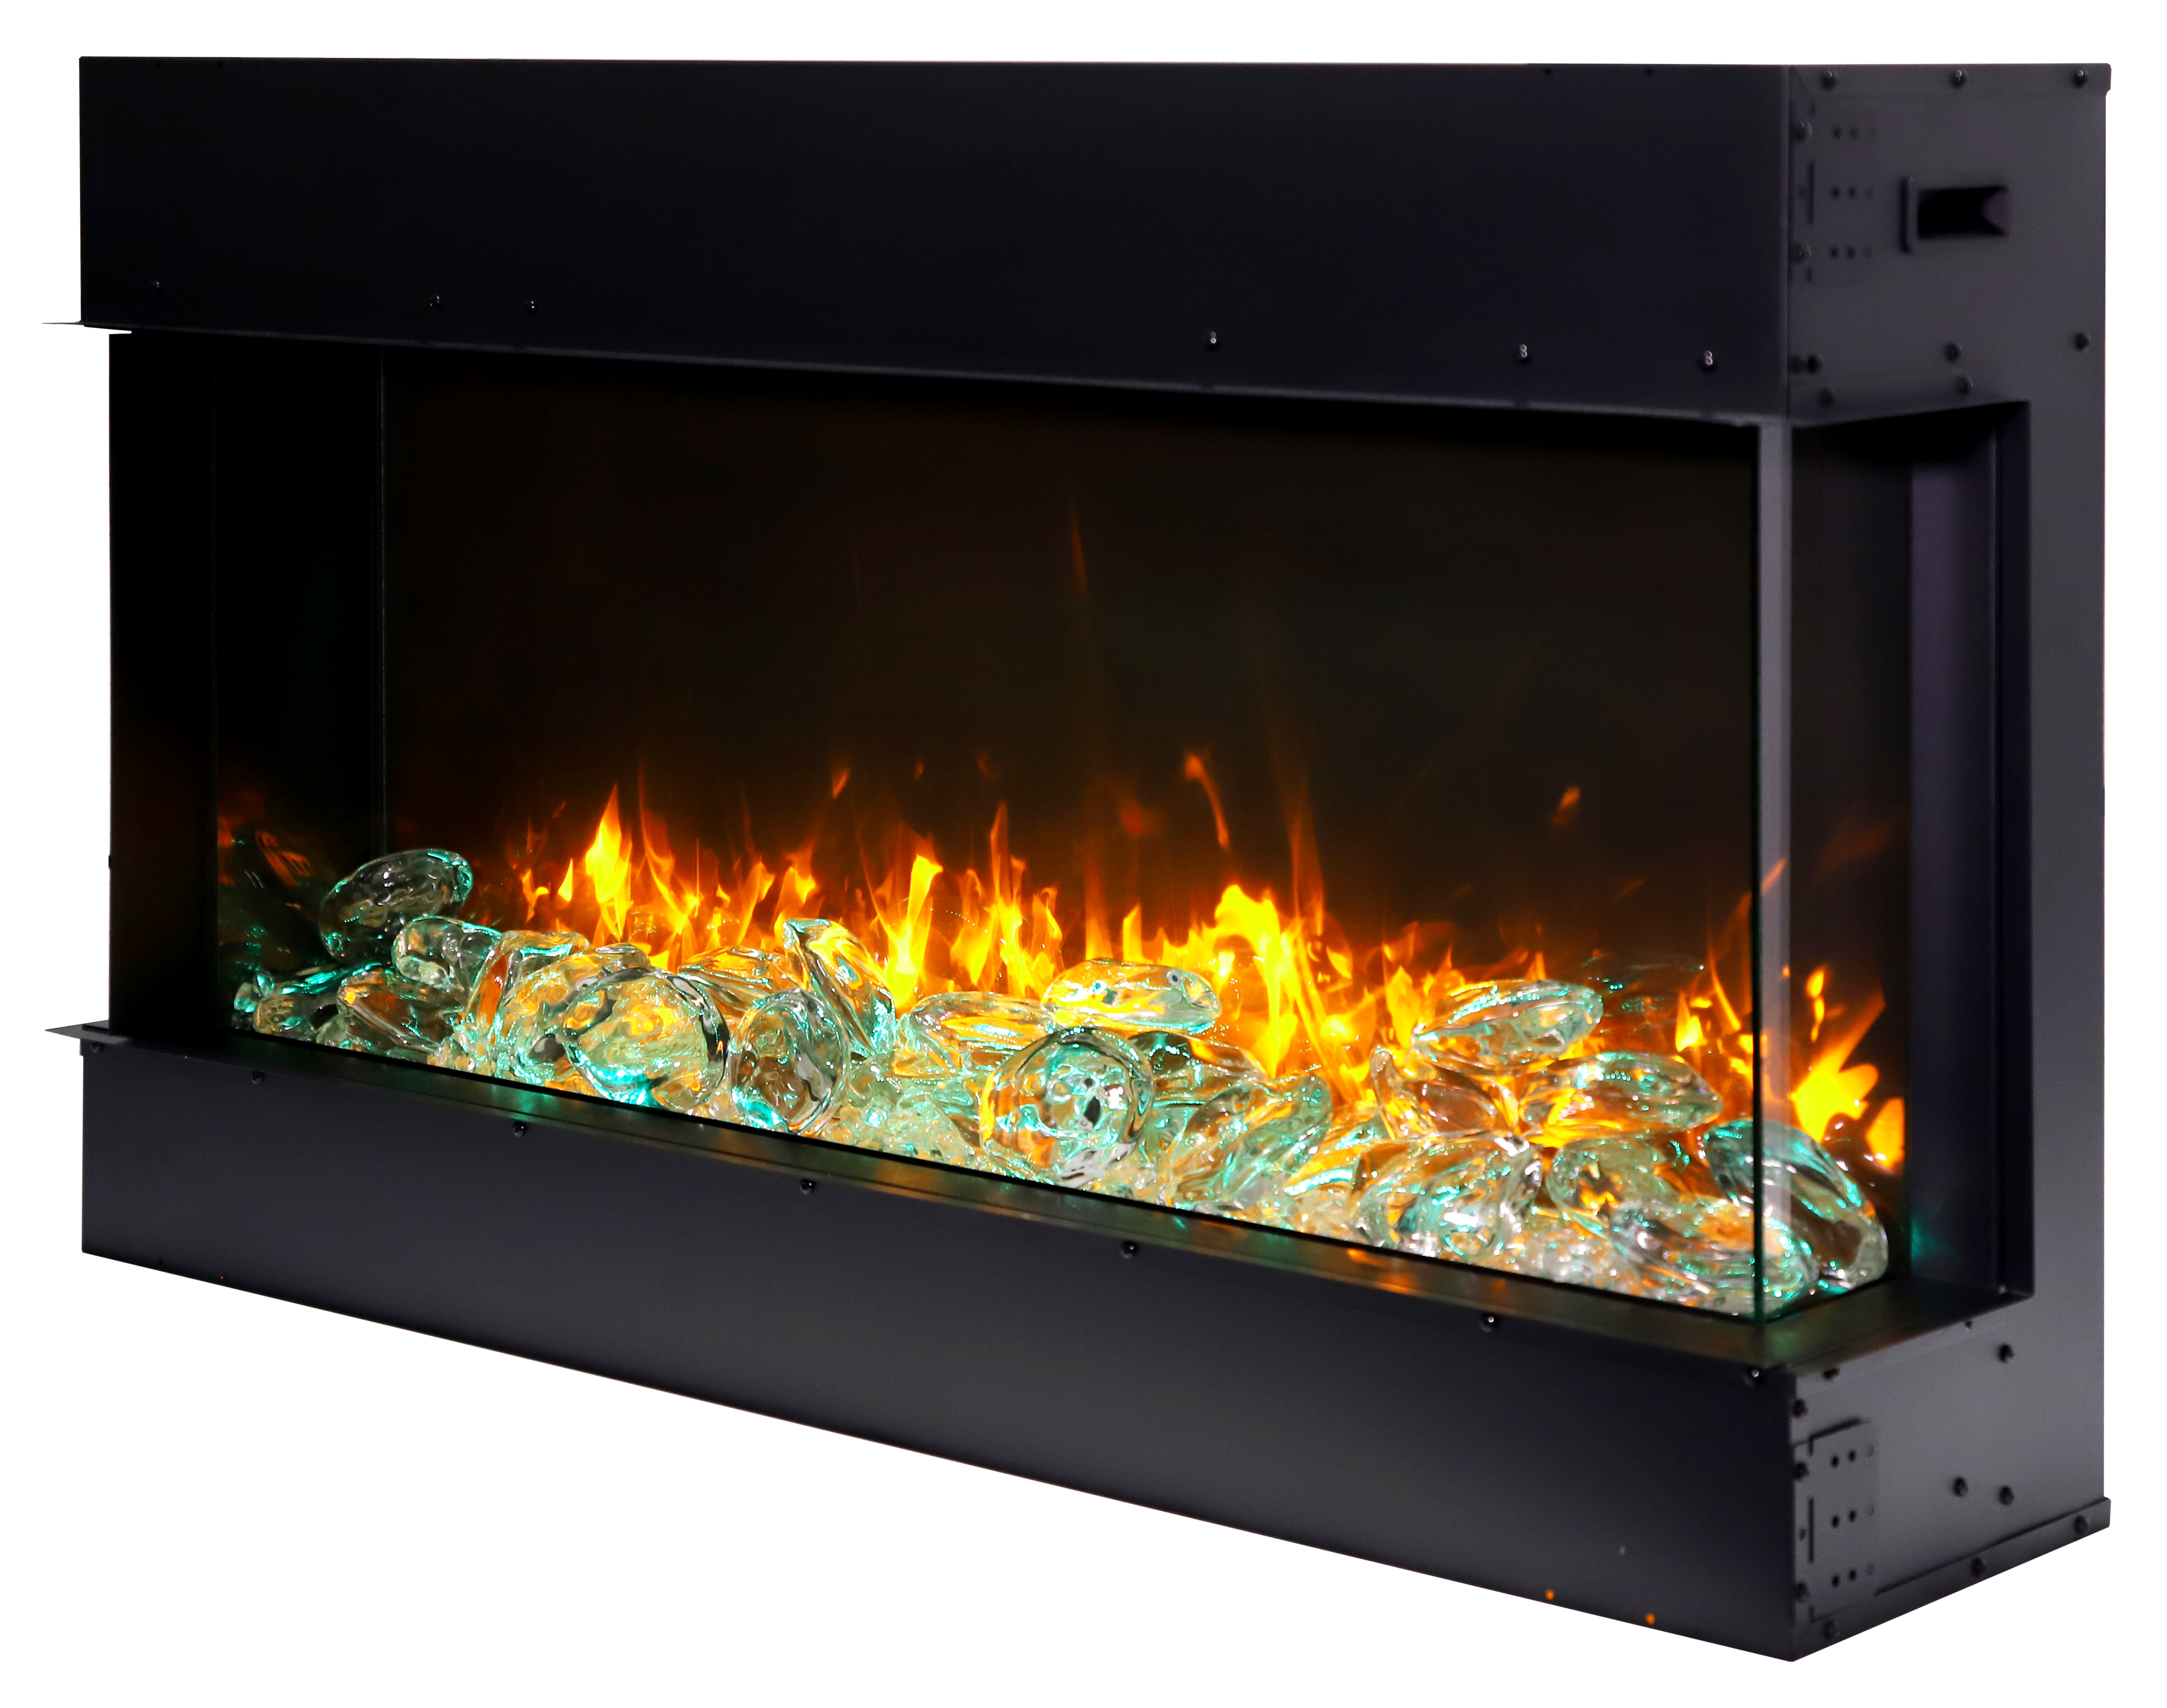 Remii BAY-SLIM 3 Sided Electric Fireplace